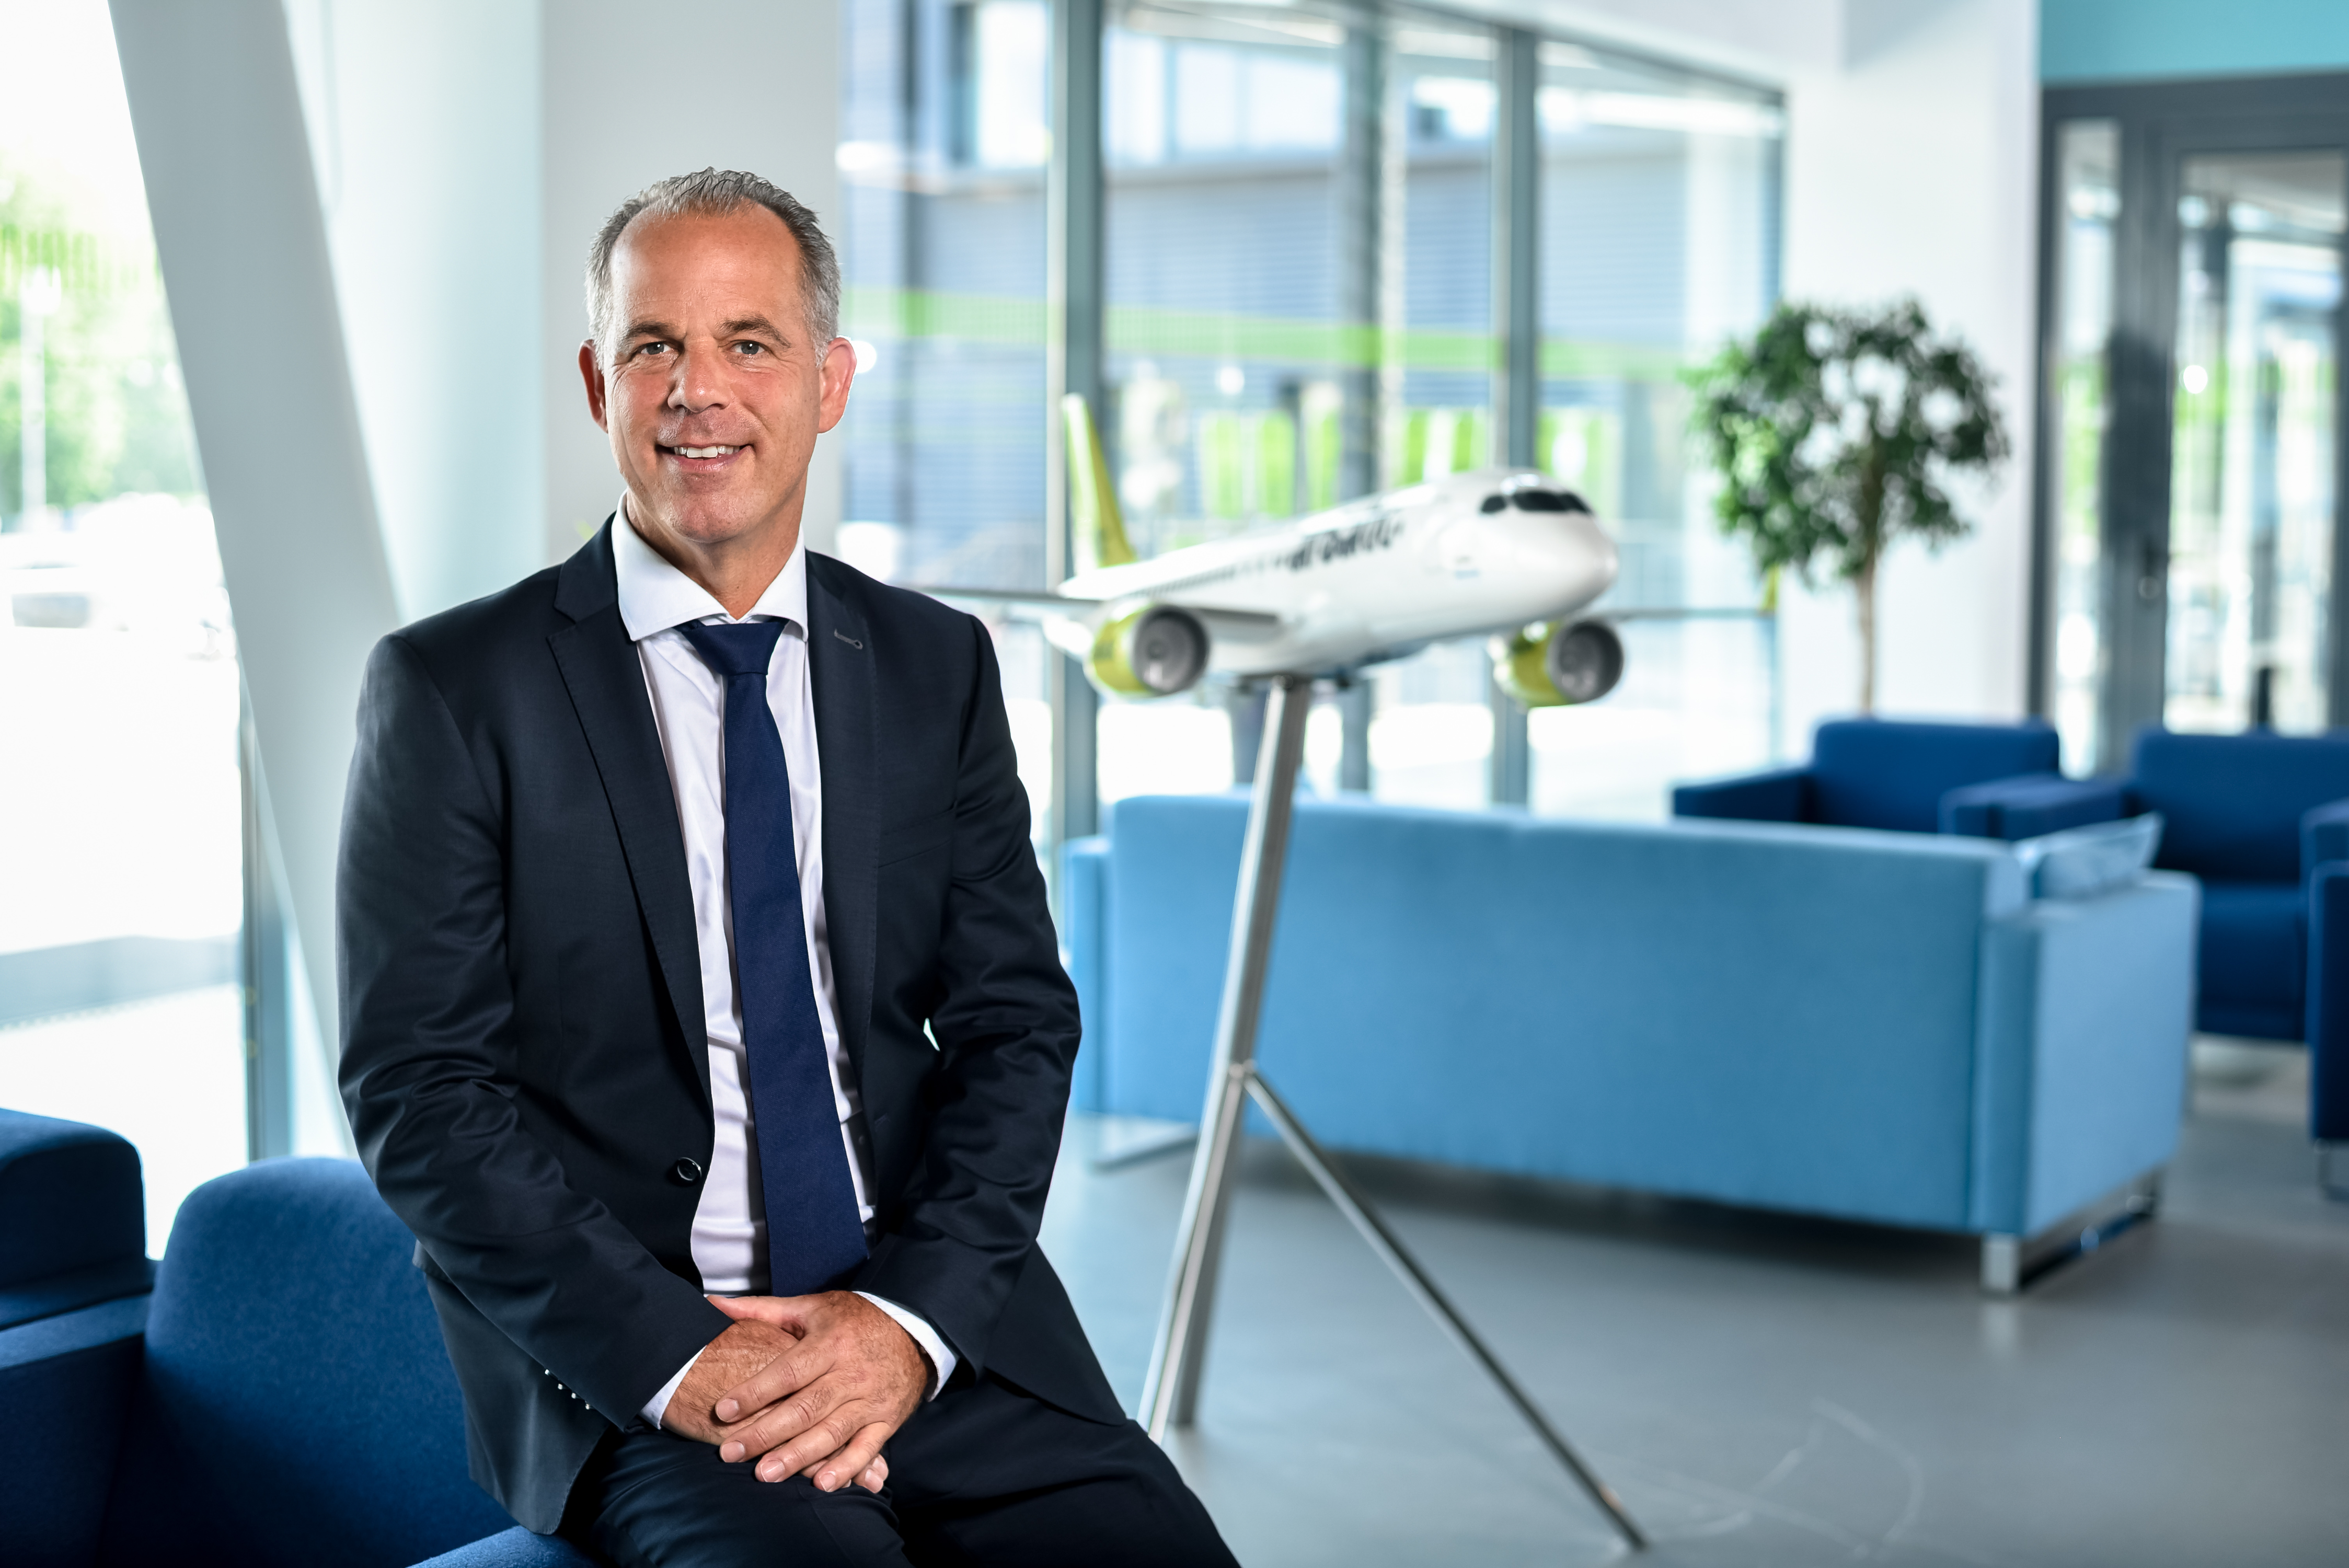 Martin Gauss, CEO of airBaltic